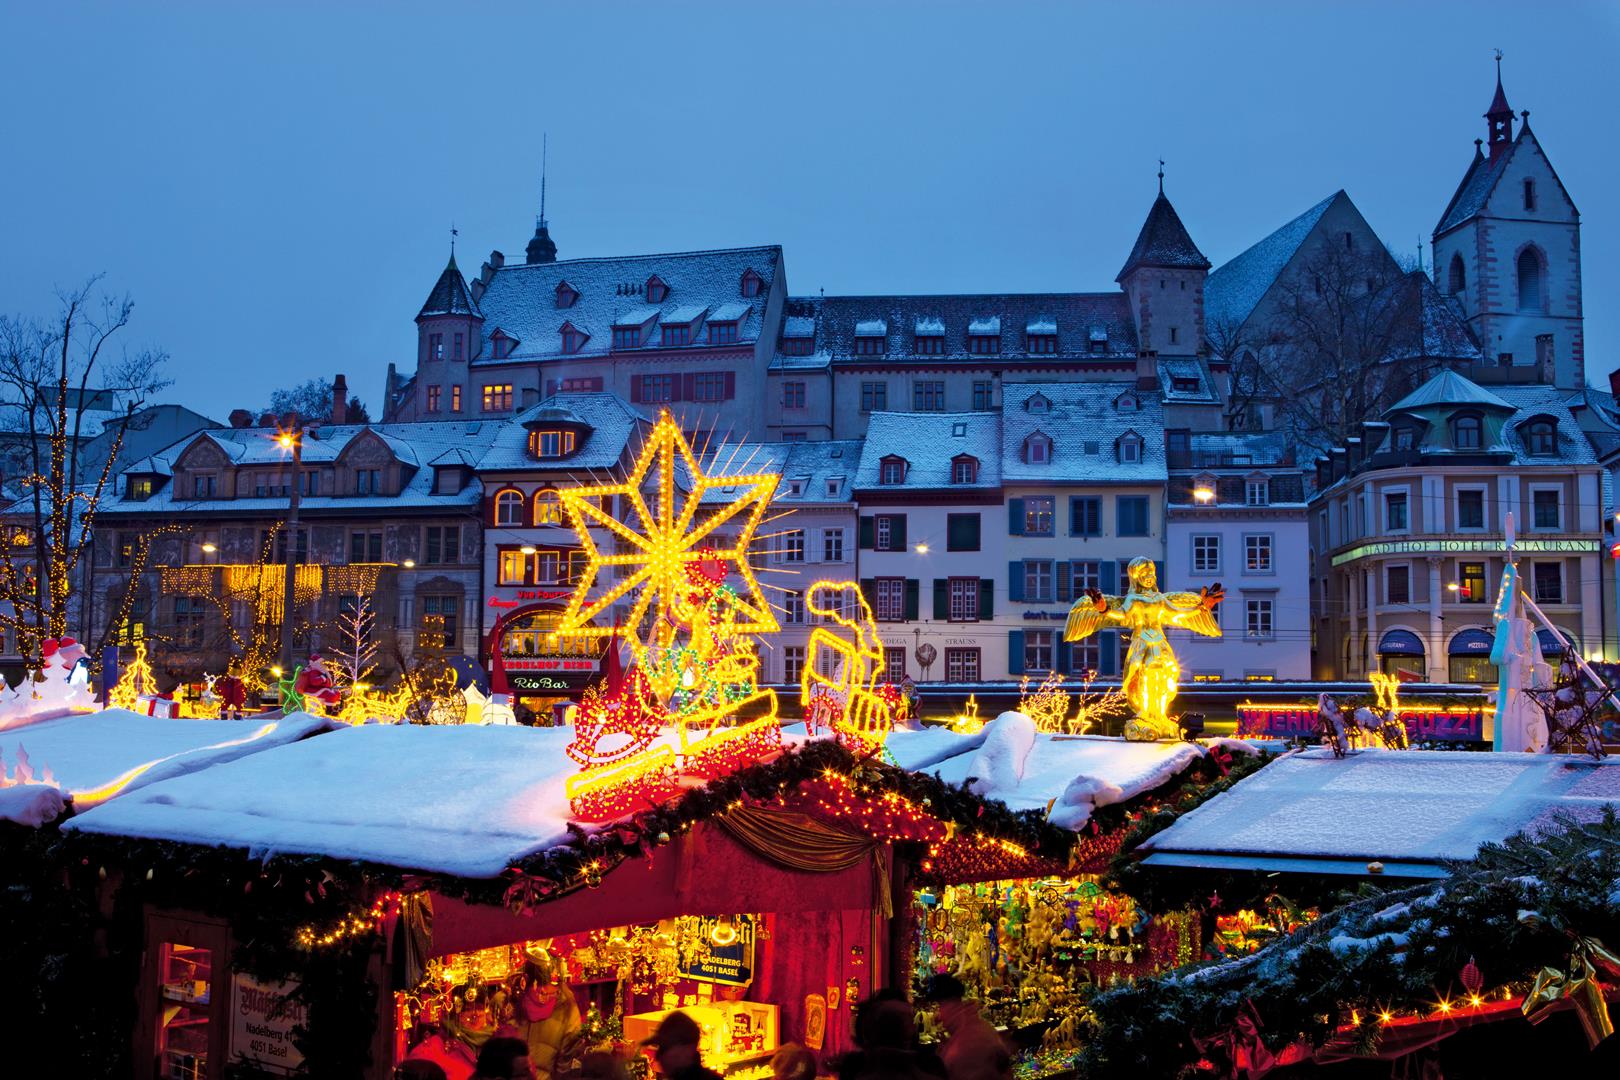 Switzerland Christmas Markets Bring Joy to the World